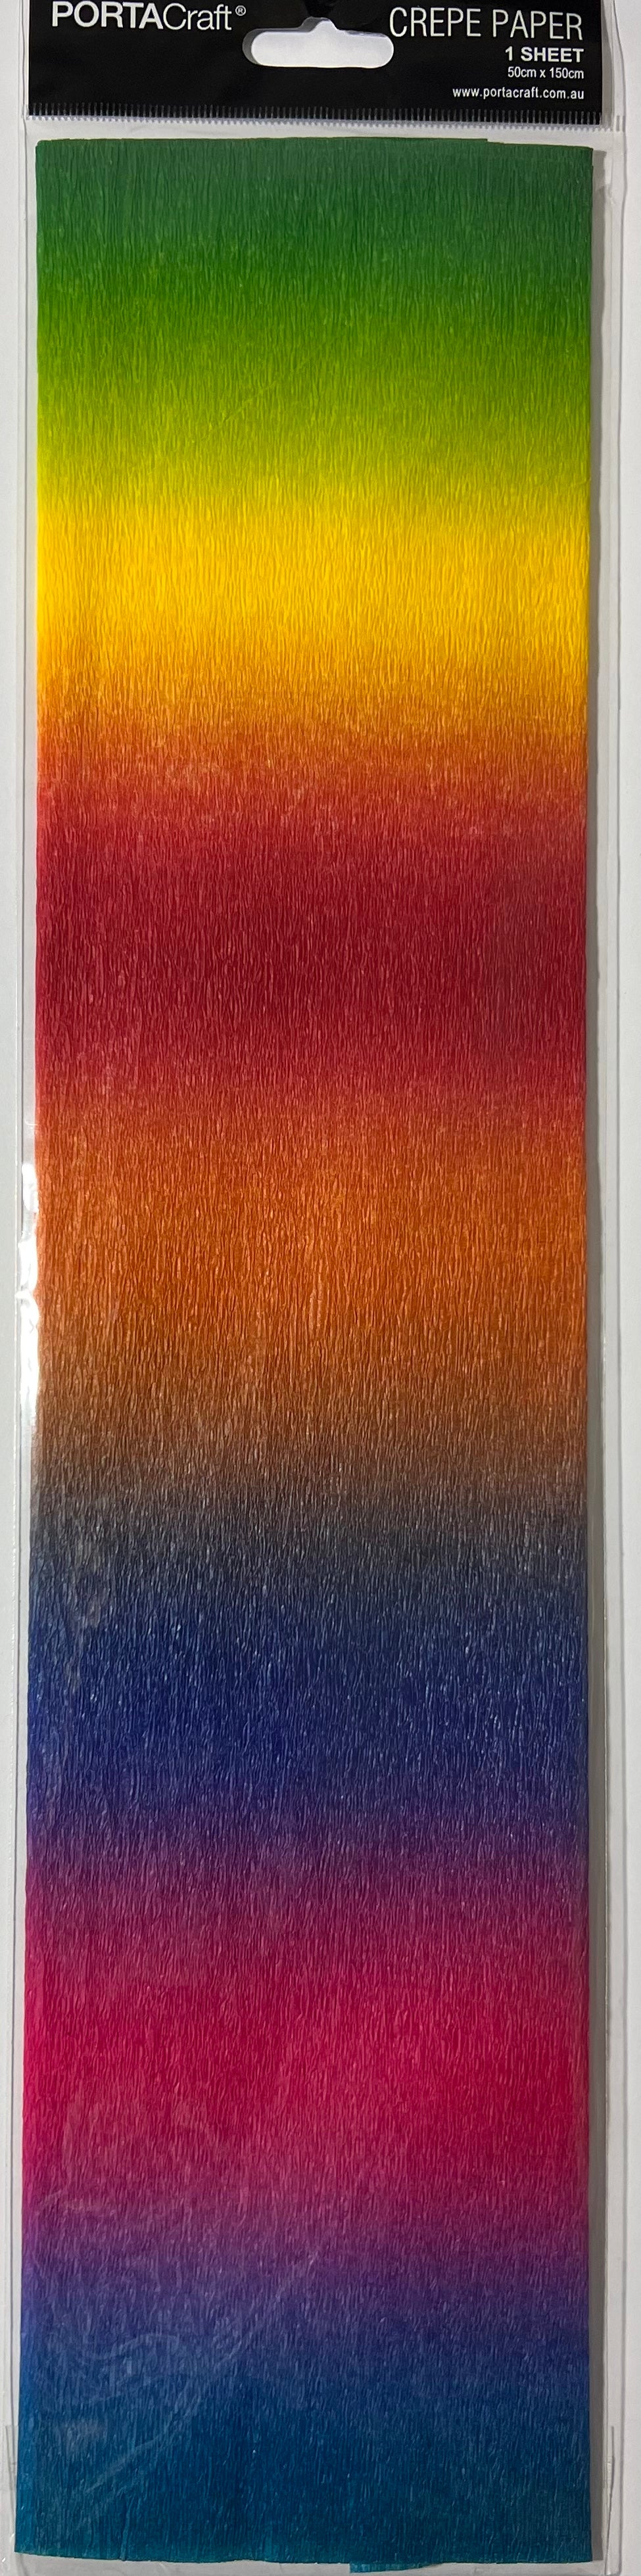 Crepe Paper - Rainbow - 50cm x 150cm - One Sheet